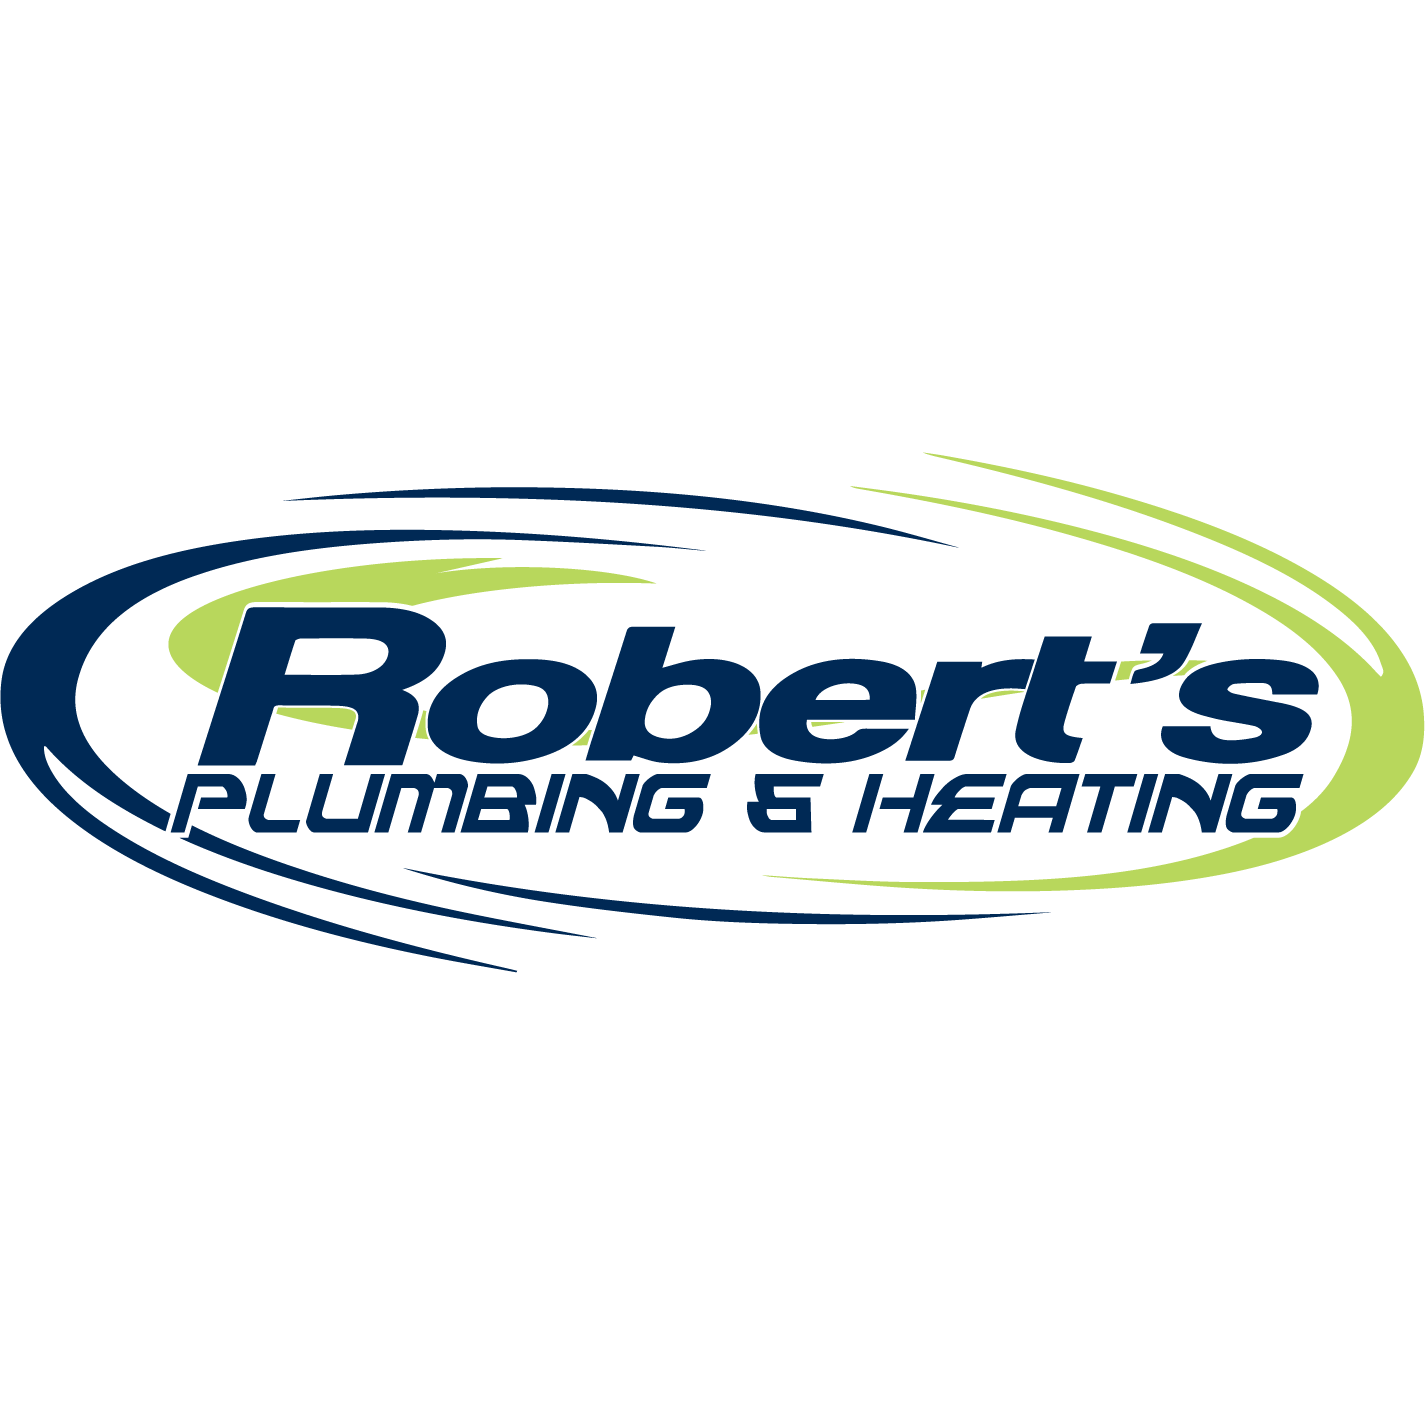 Robert's Plumbing & Heating - Madison, WI 53714 - (608)416-5646 | ShowMeLocal.com